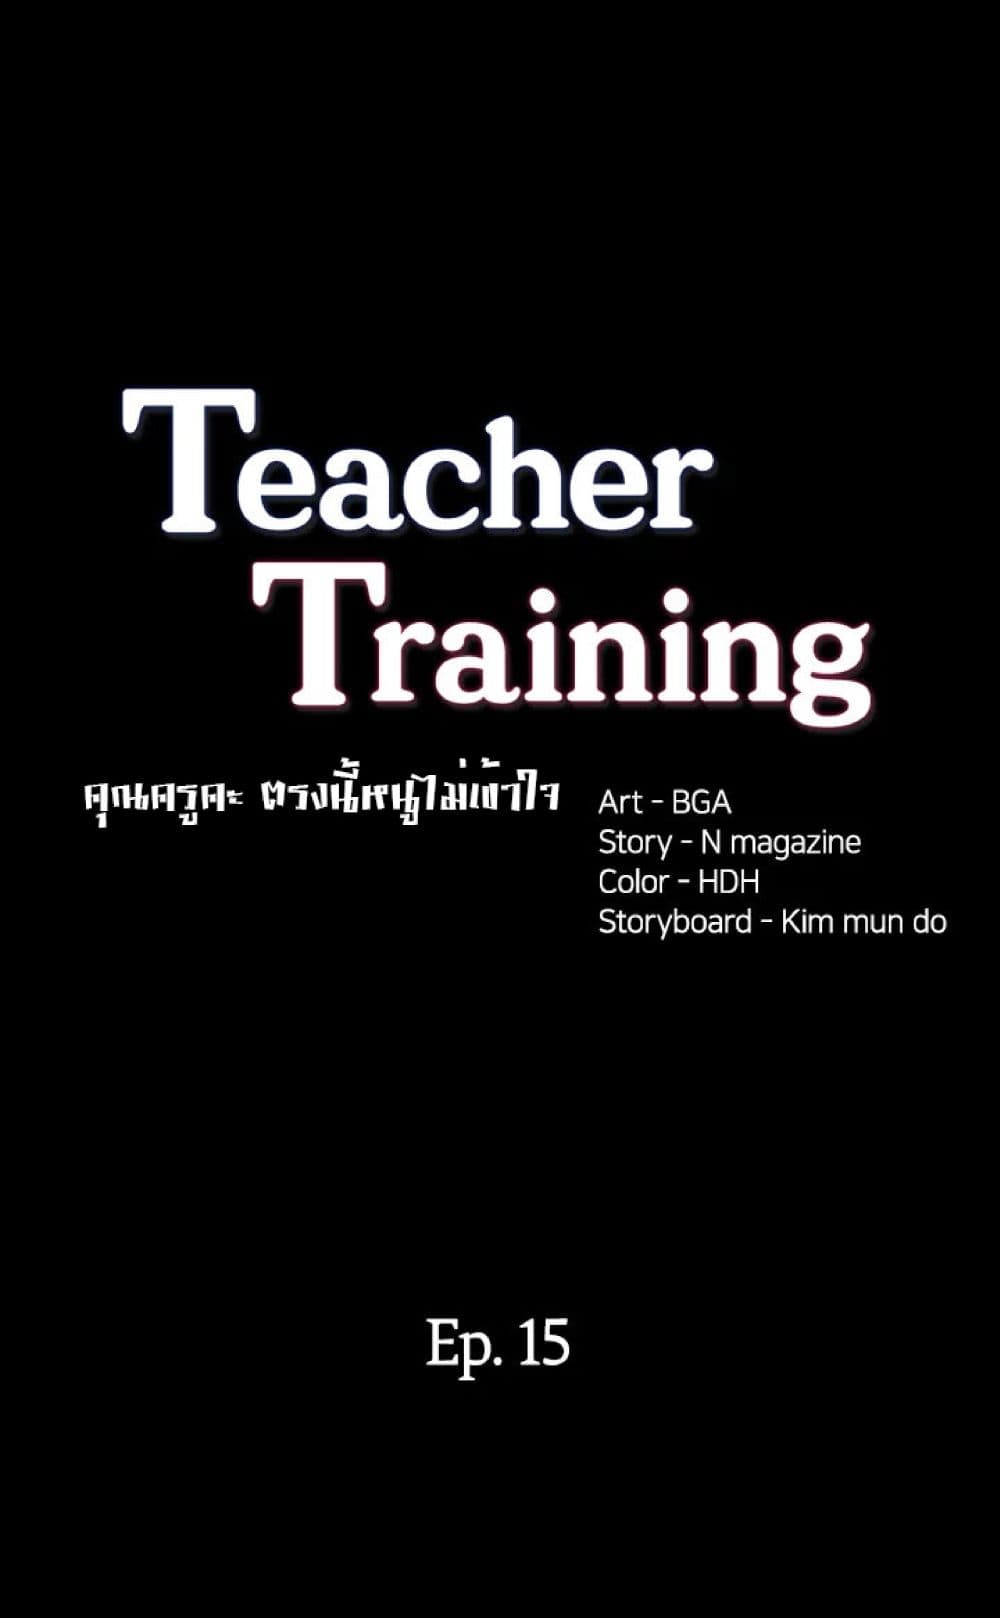 Teaching Practice